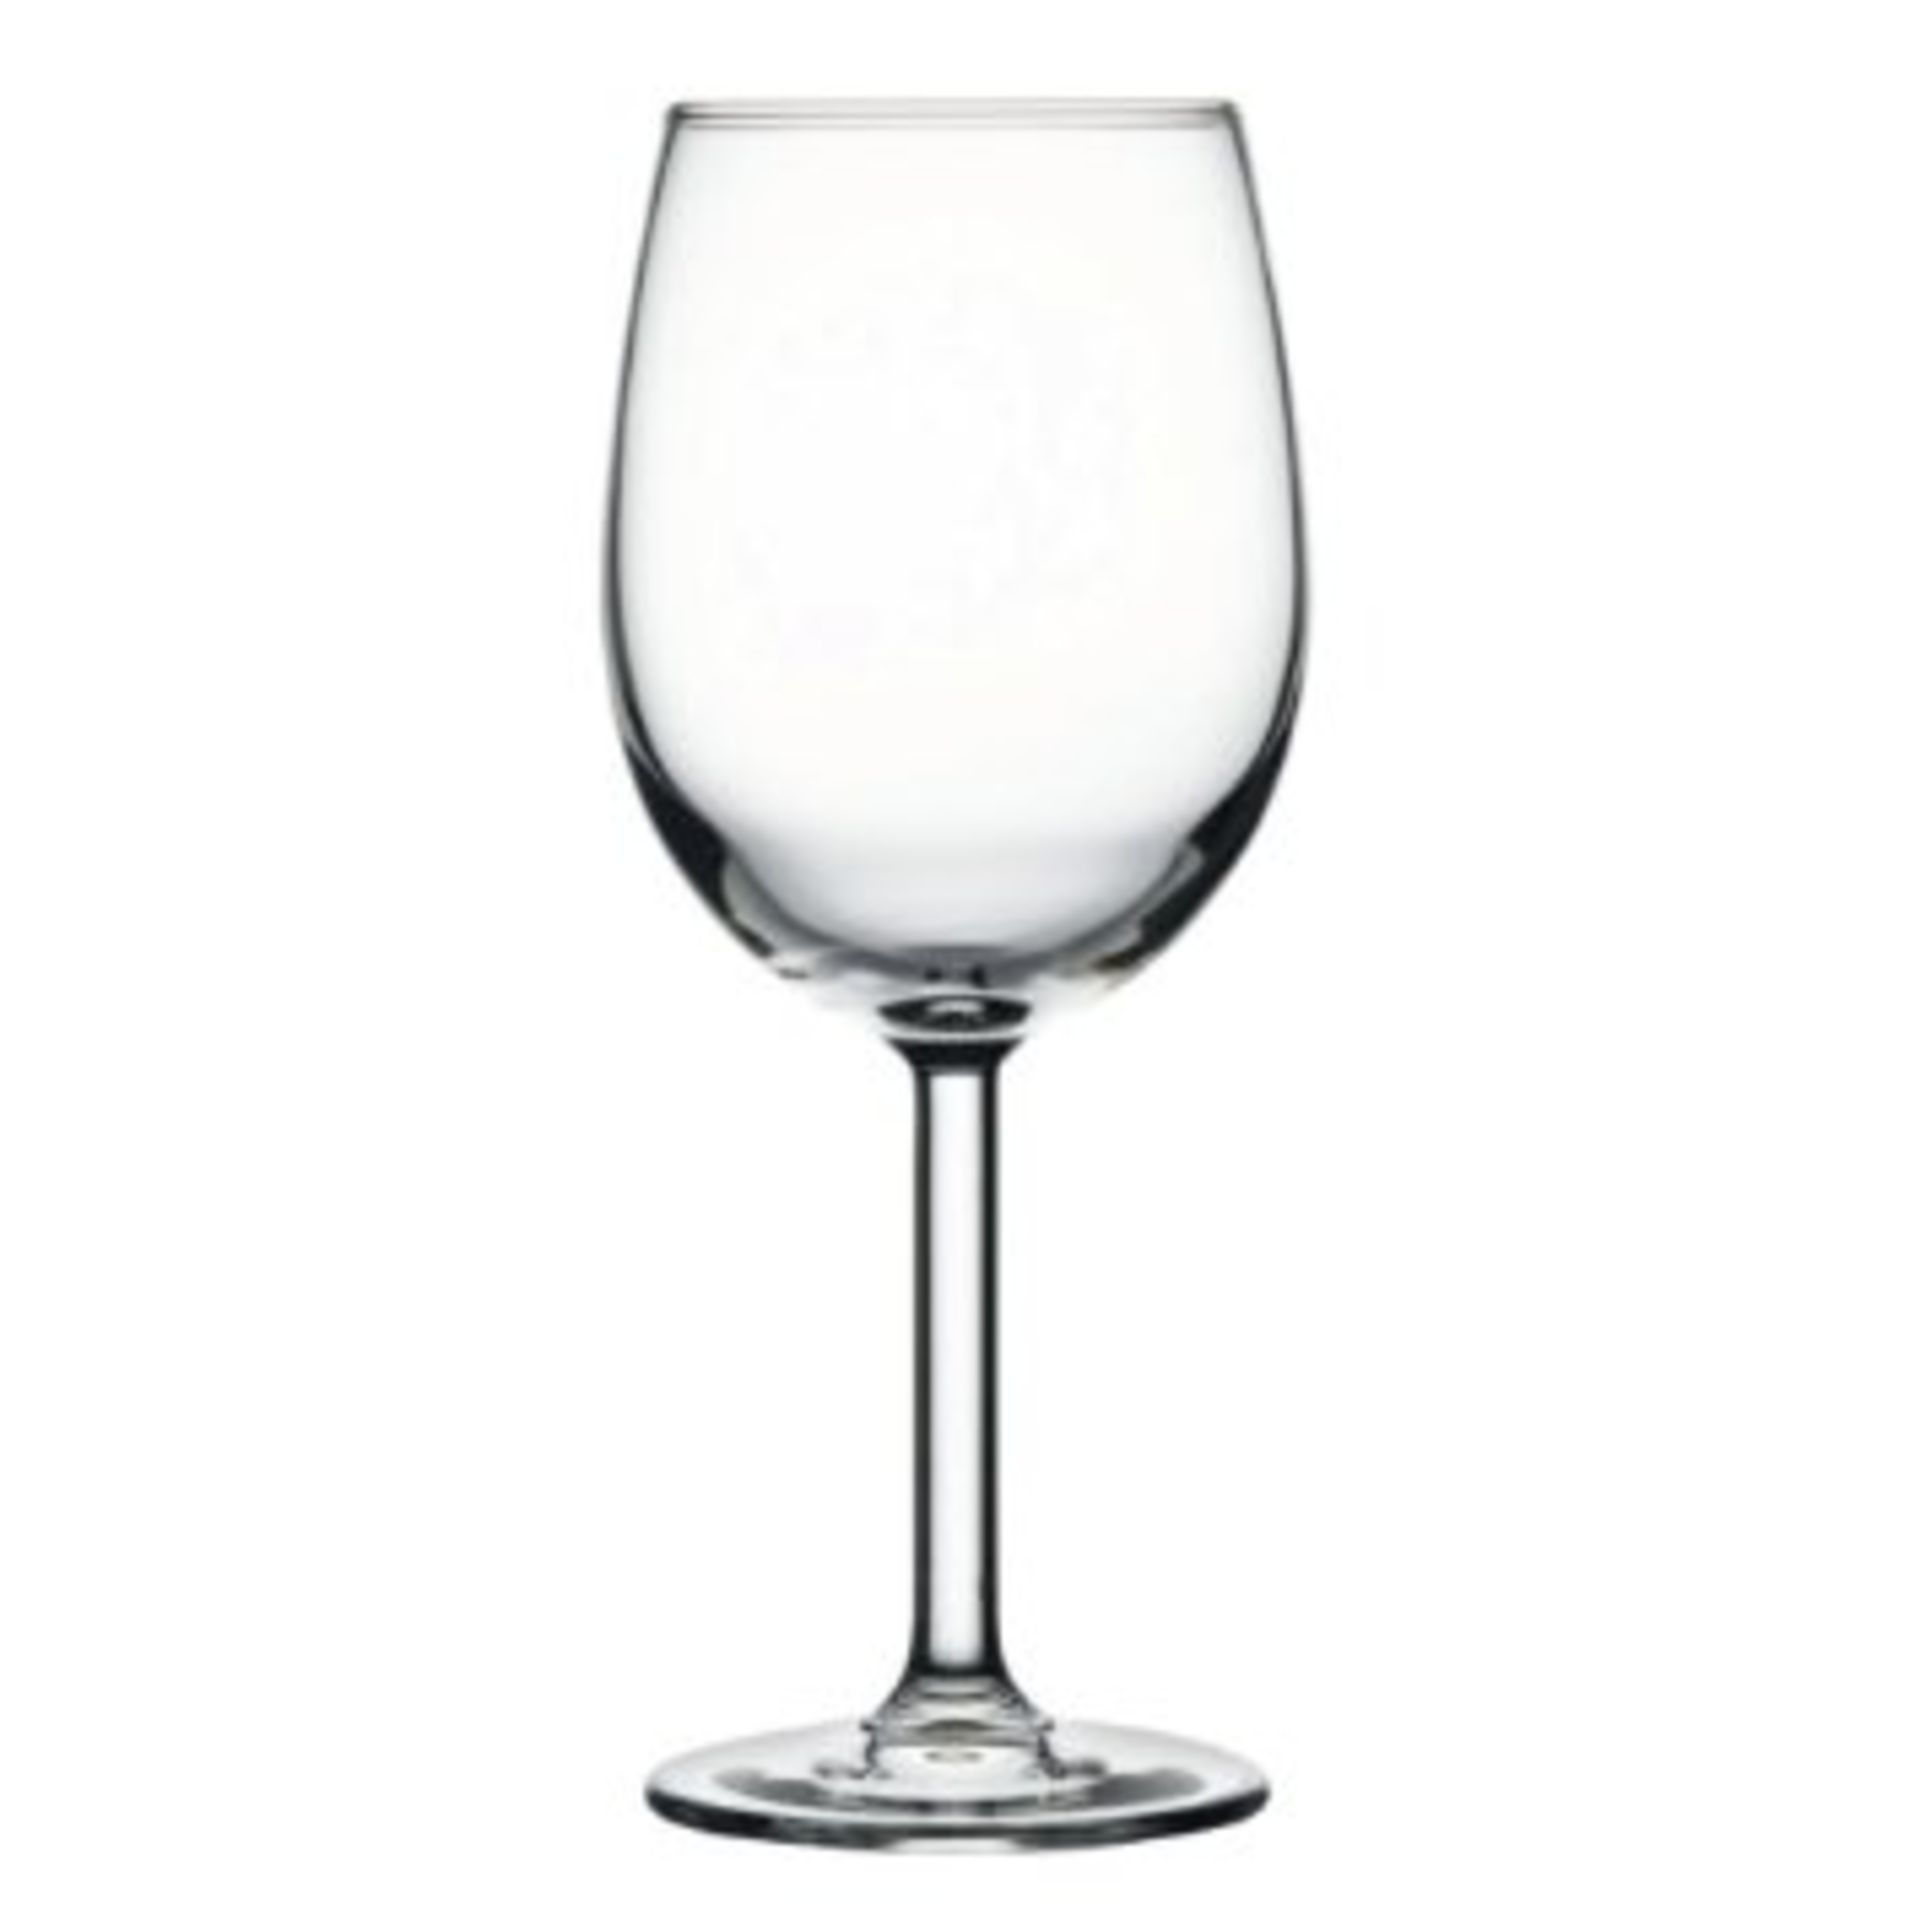 V Brand New 3 Piece Imperial White Wine Glass 198 ml